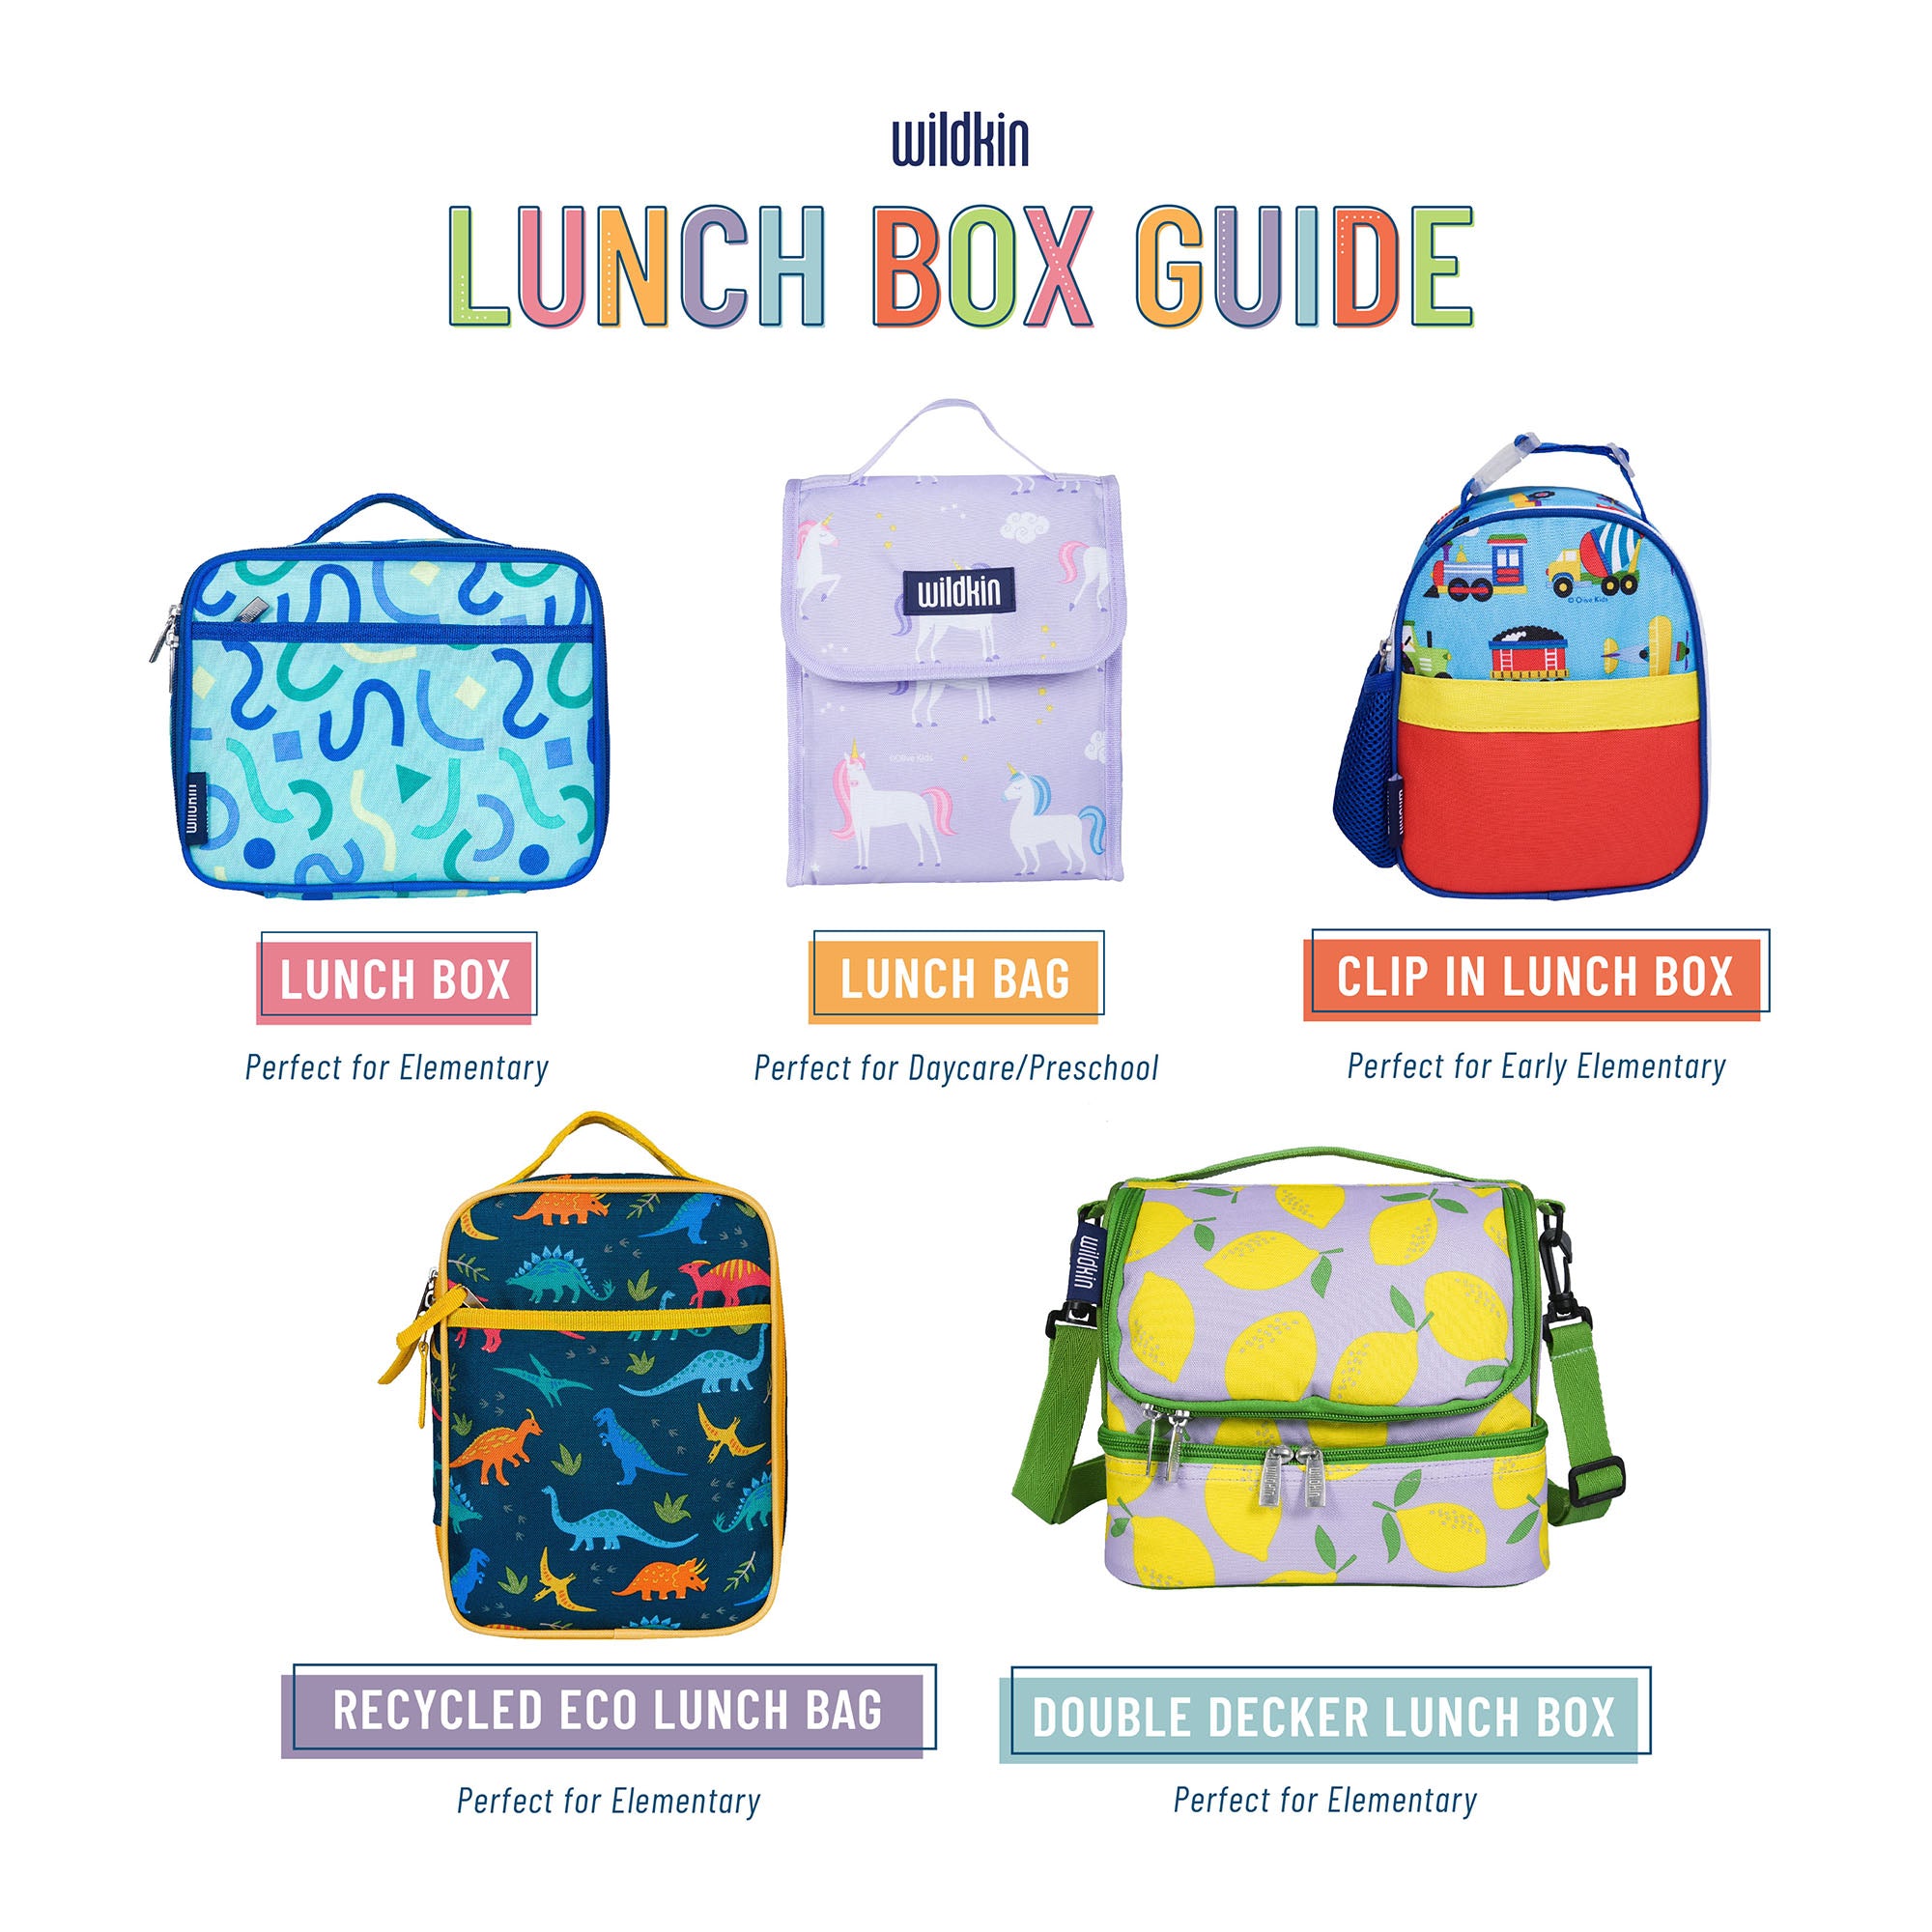 Wildkin Holographic Lunch Bag